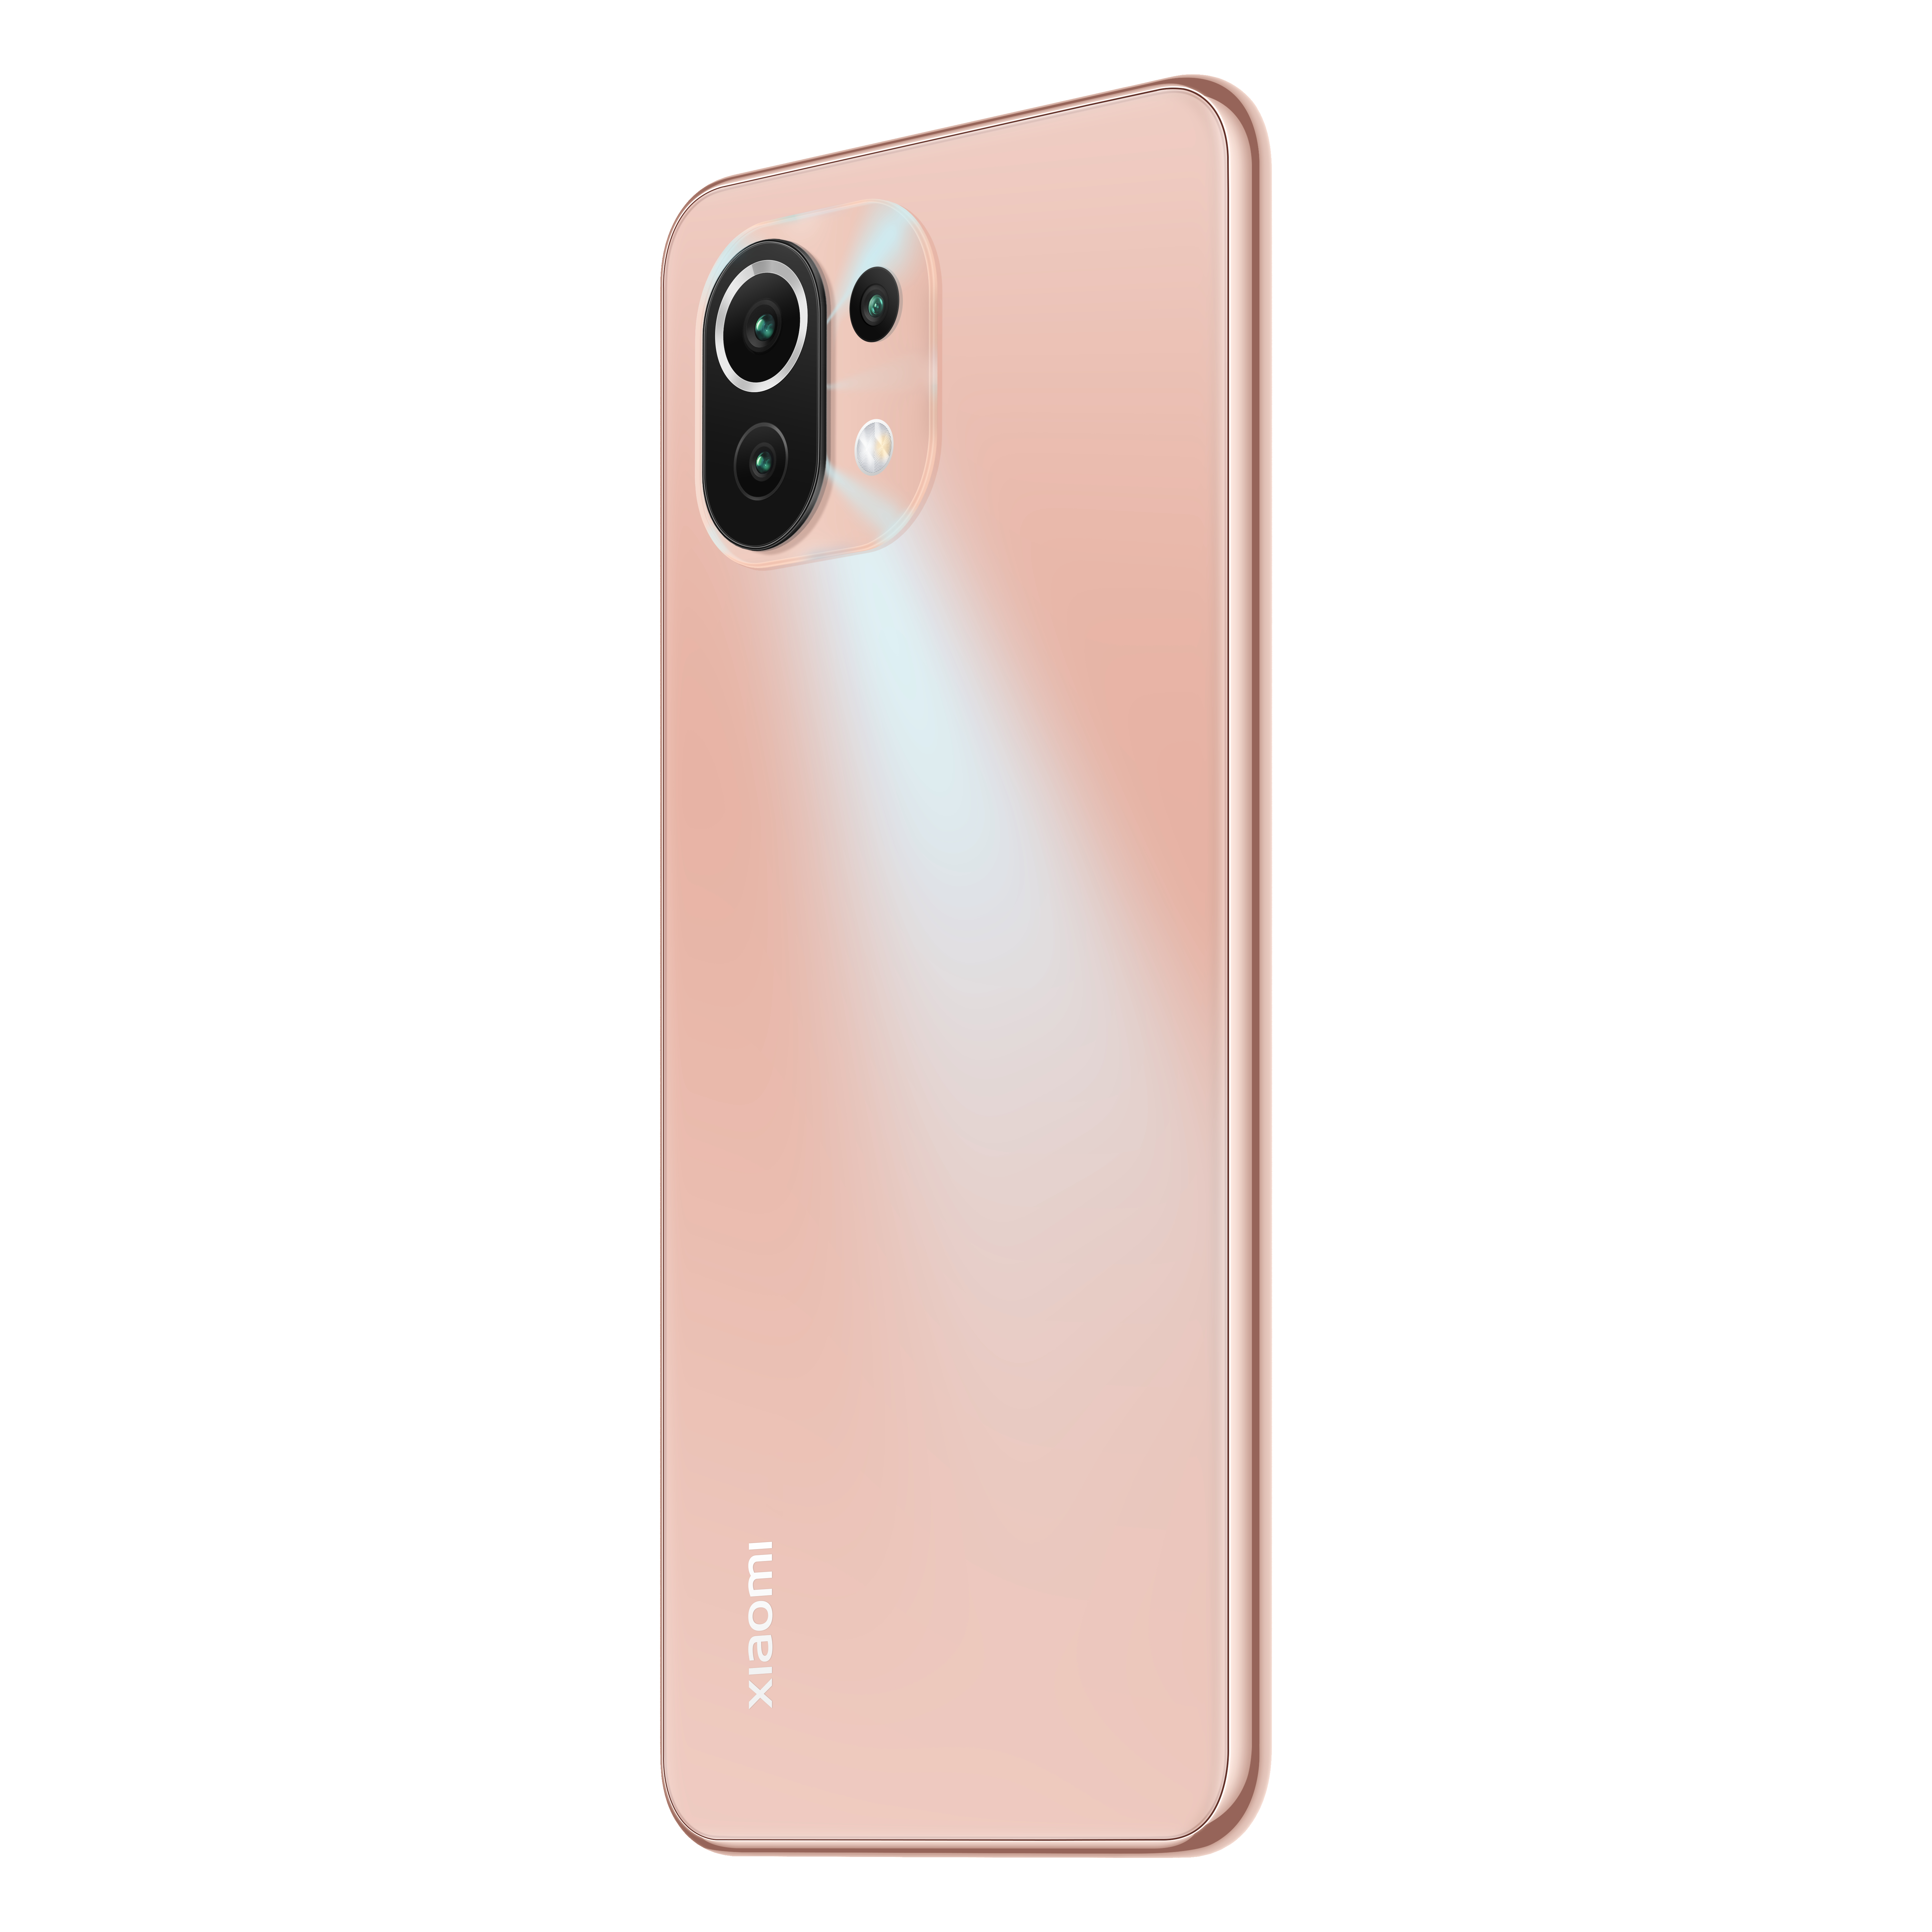 Lite 128 SIM Dual XIAOMI Mi Peach 11 GB Pink